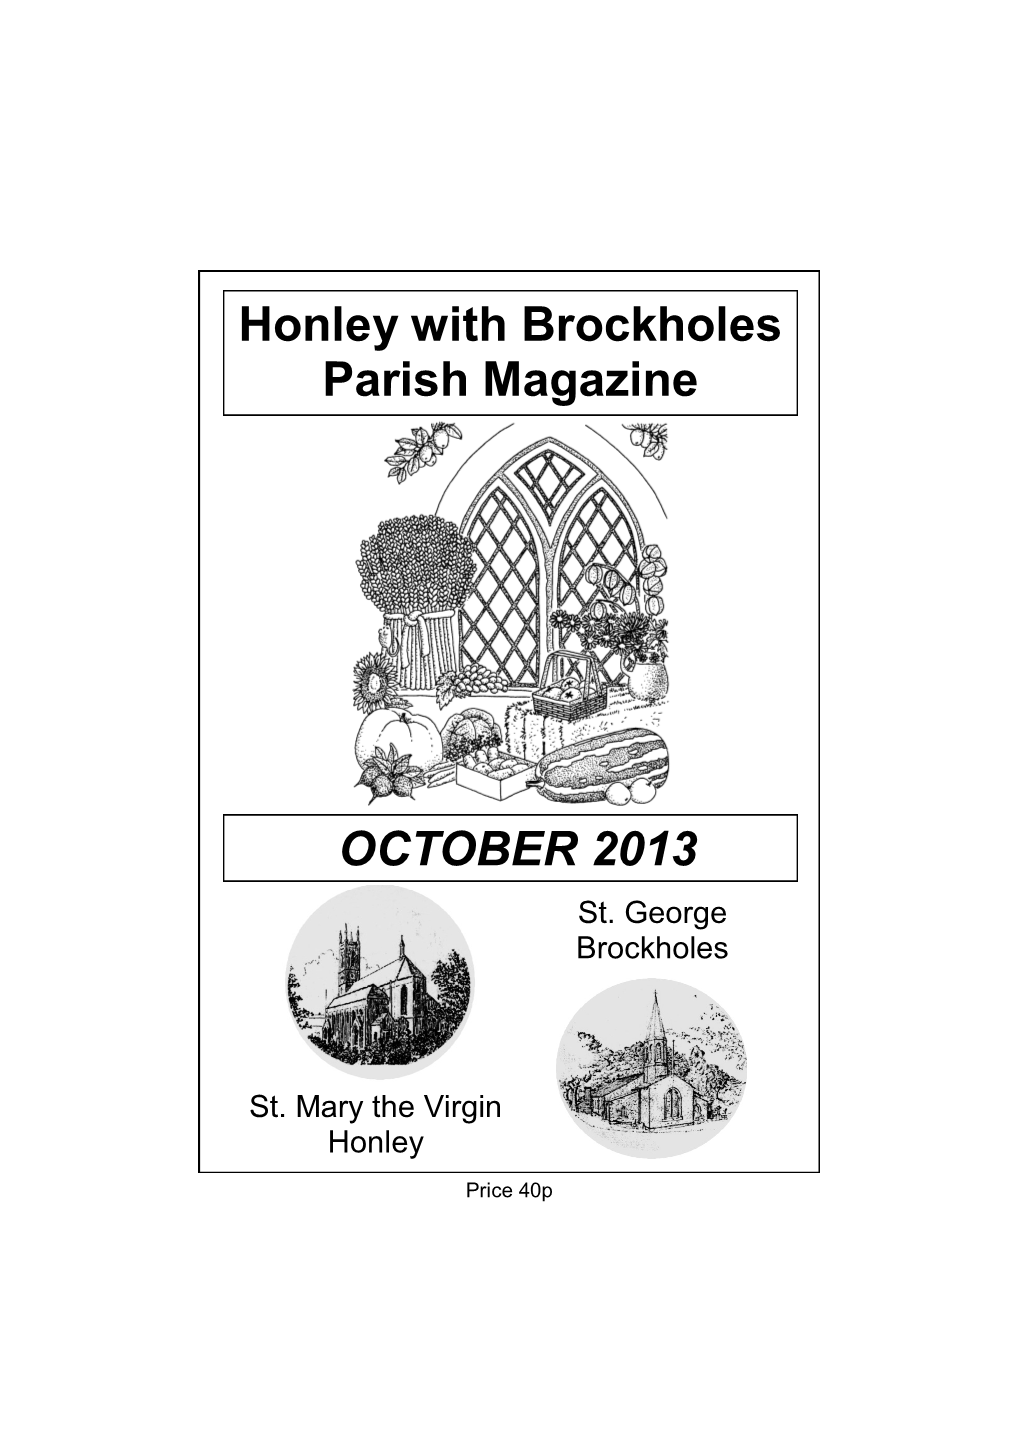 OCTOBER 2013 Honley with Brockholes Parish Magazine